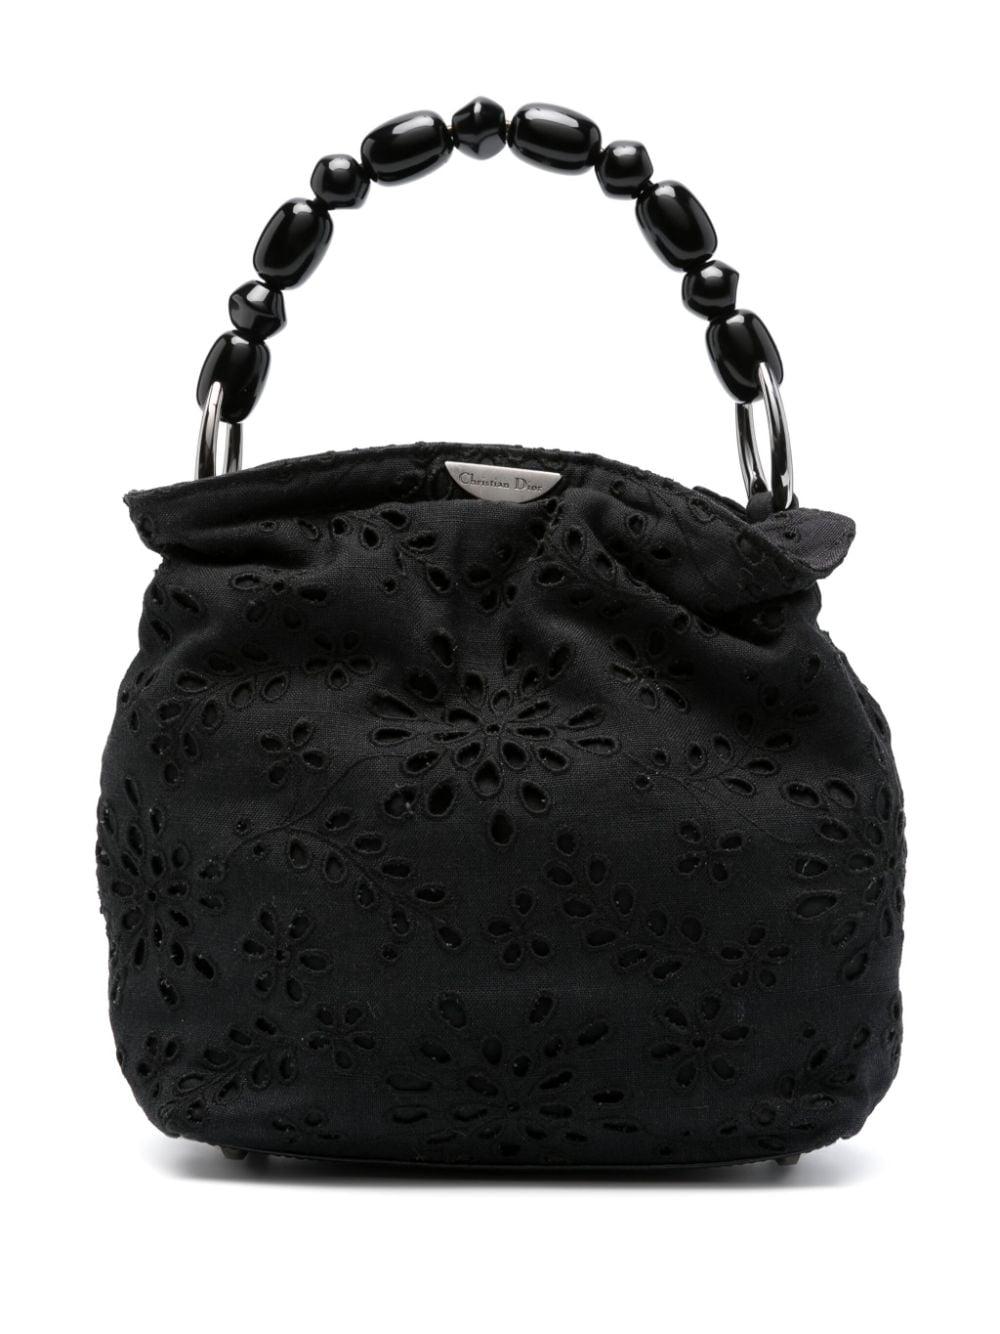 Christian Dior Black Embroidered Cotton Malice Tote Bag For Sale 2